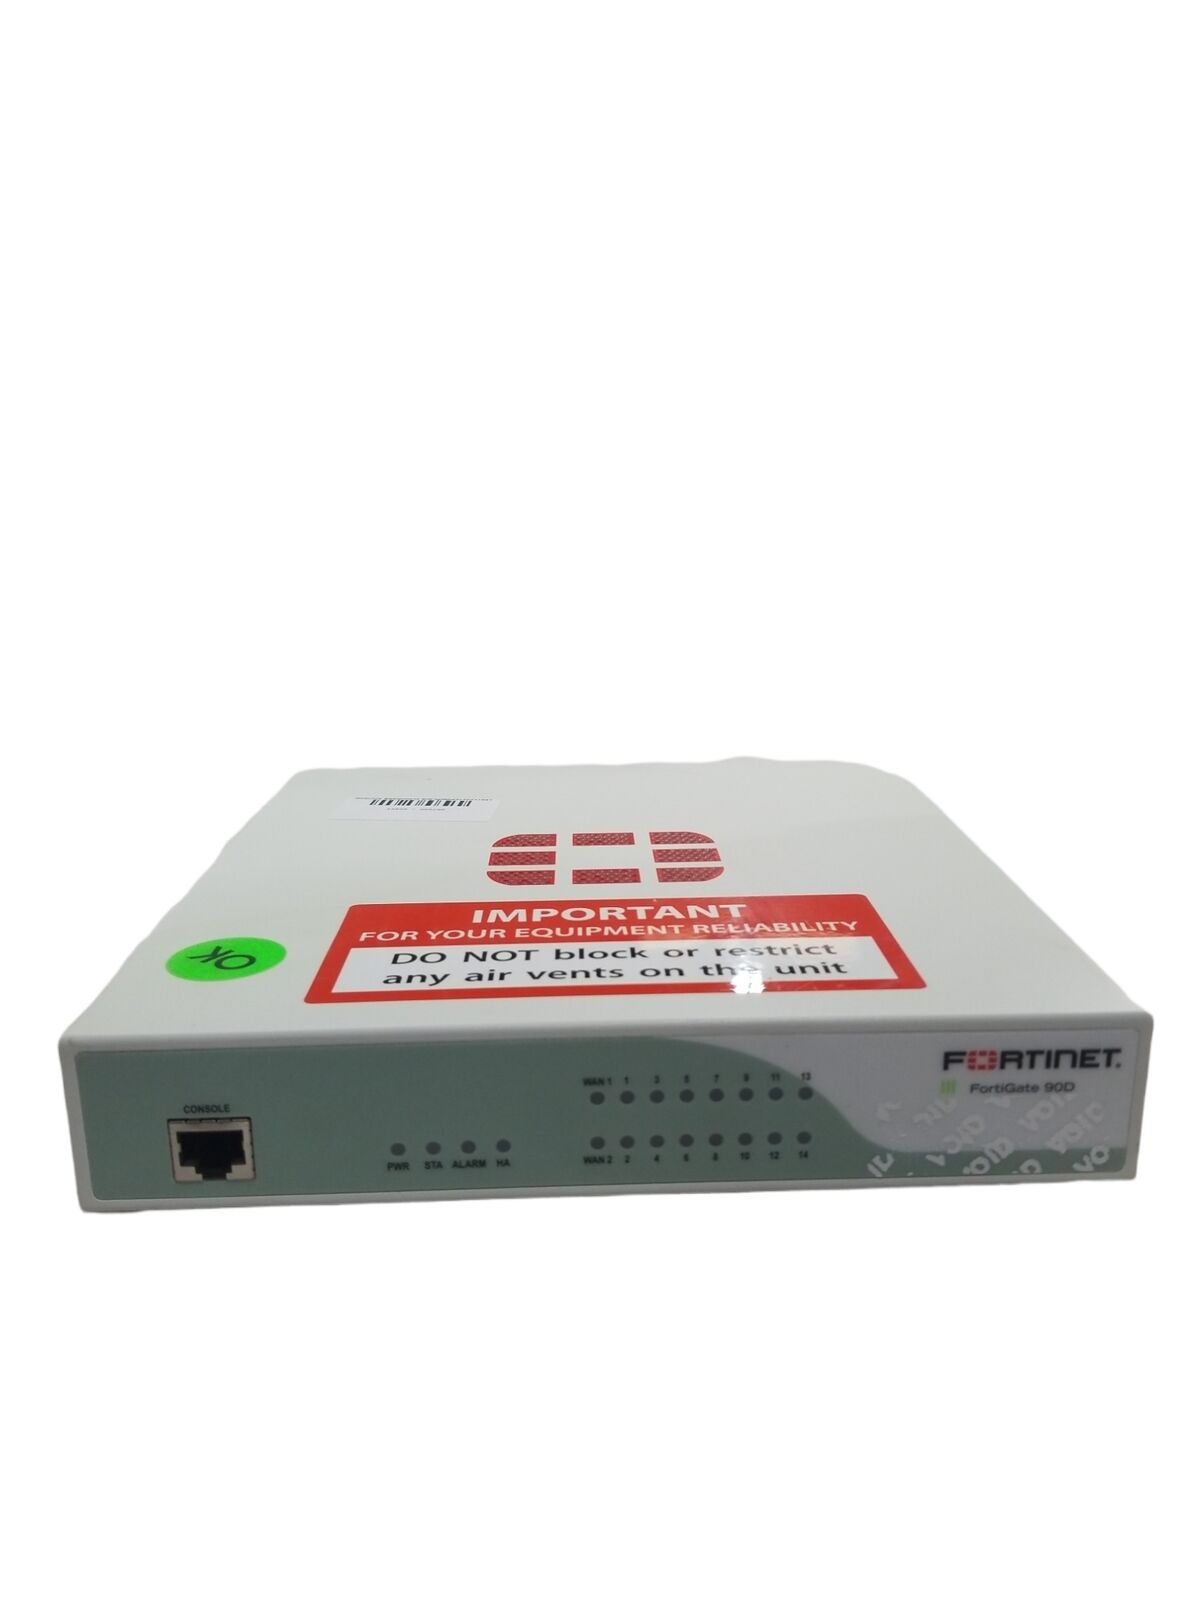 Fortinet Fortigate 90D Firewall Network Security Appliance FG-90D